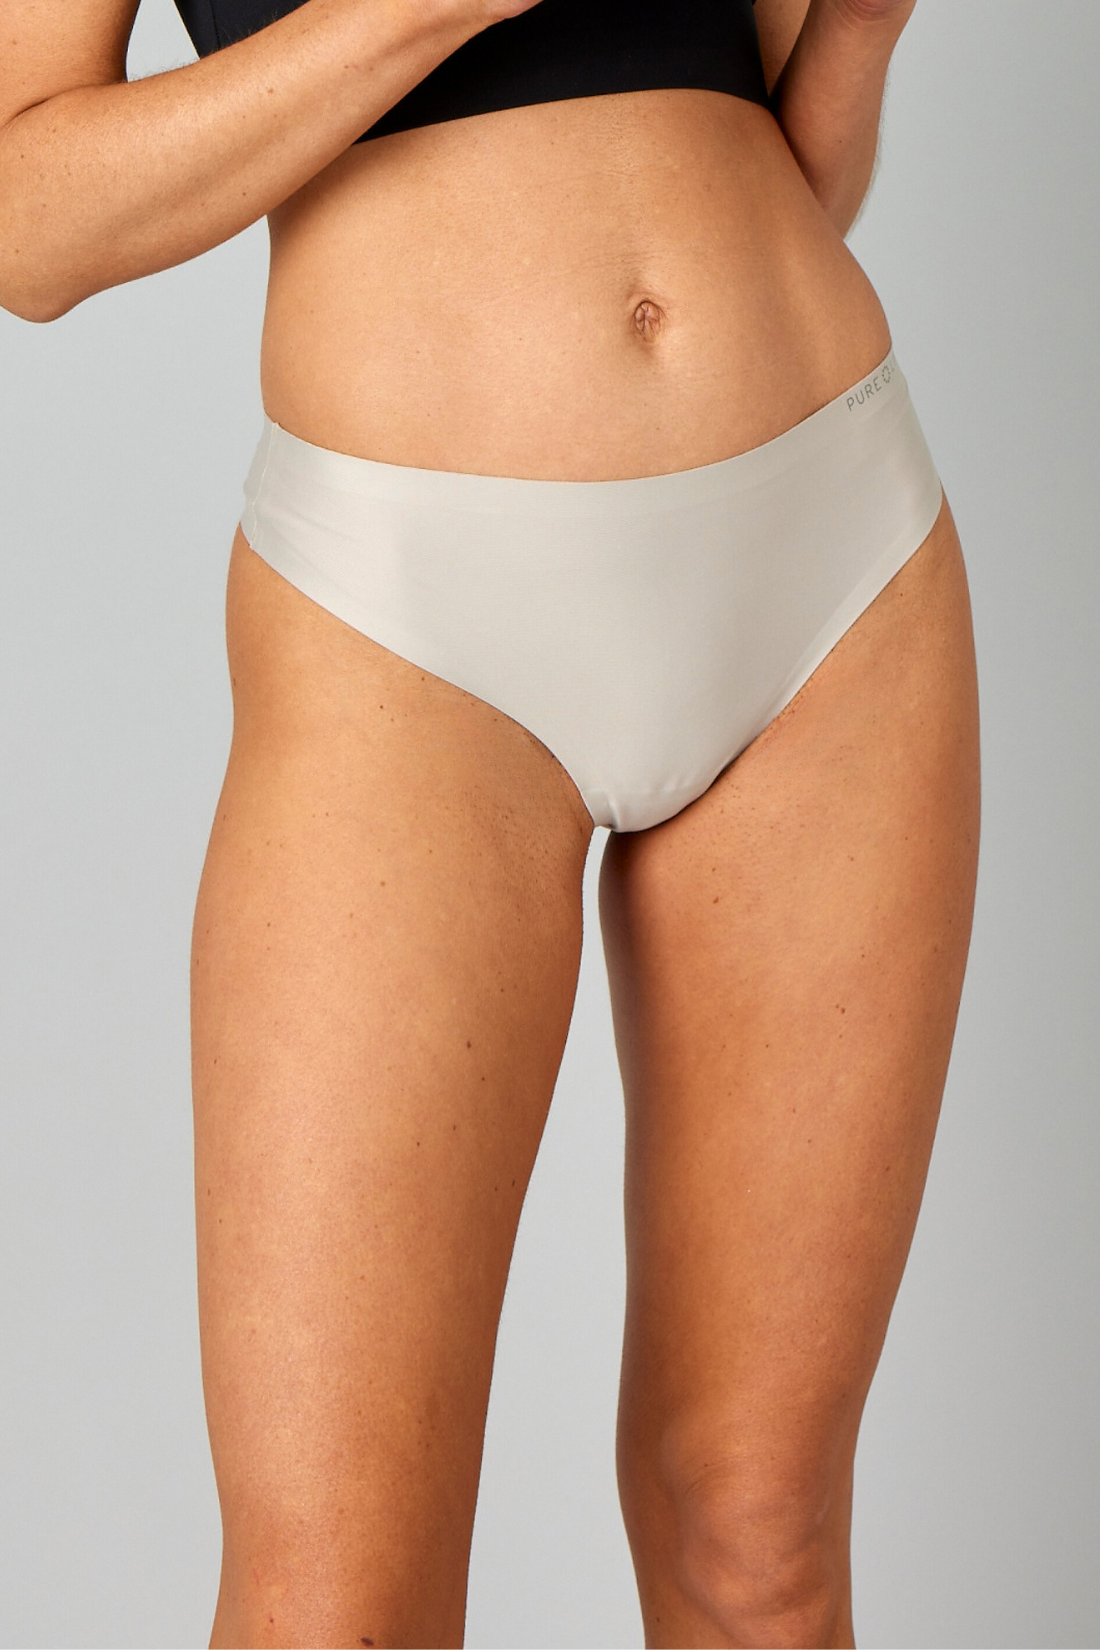 Panties Panties T String Thongs Underwear Women 95%Cotton Briefs G-string